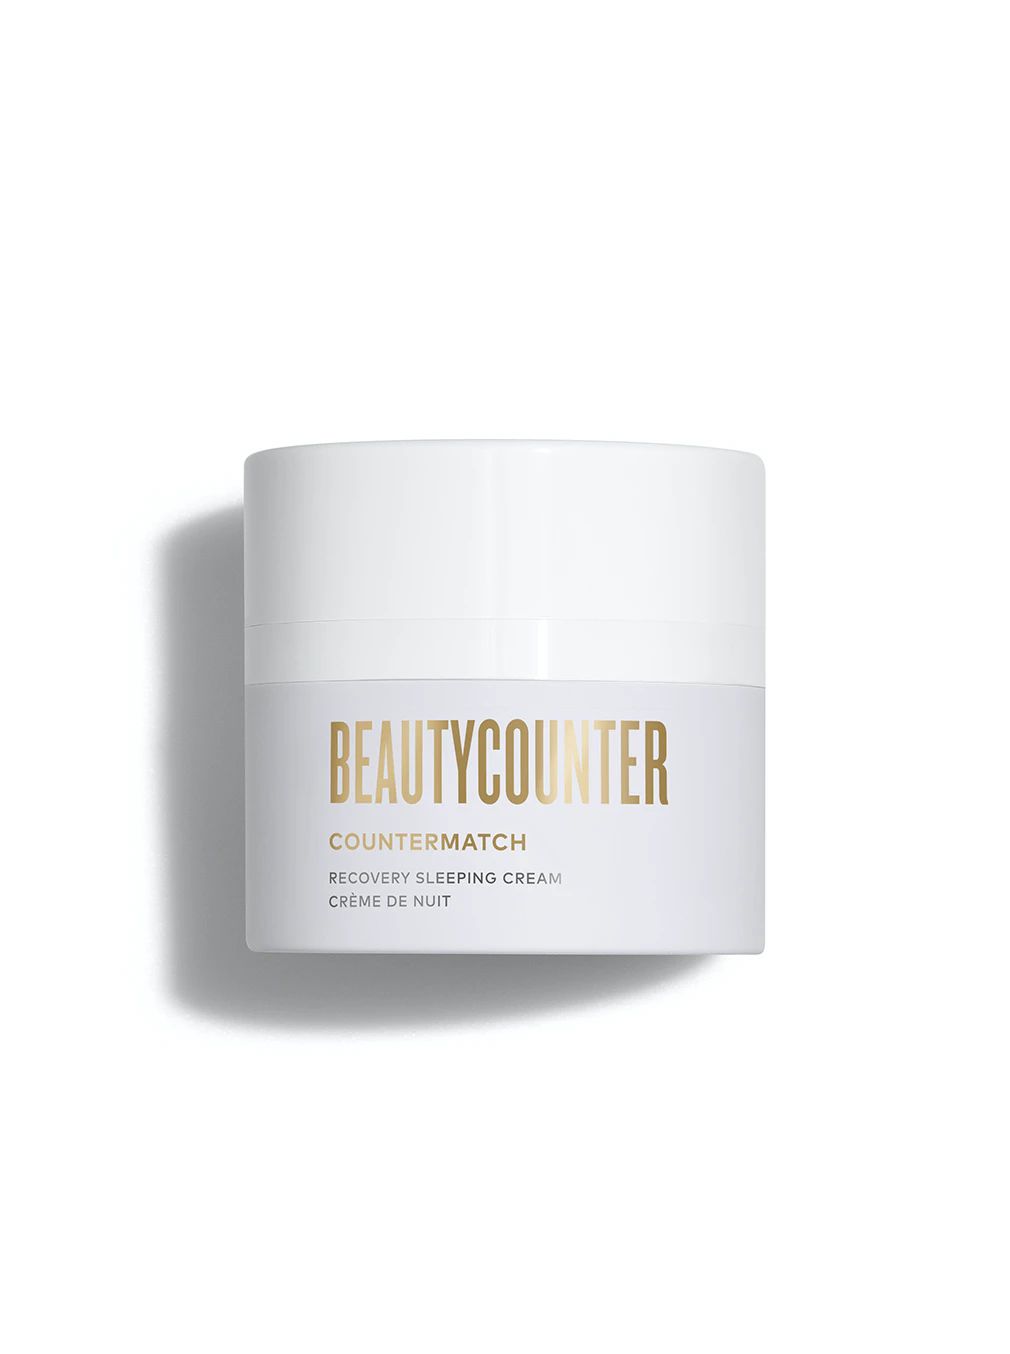 Countermatch Recovery Sleeping Cream | Beautycounter.com